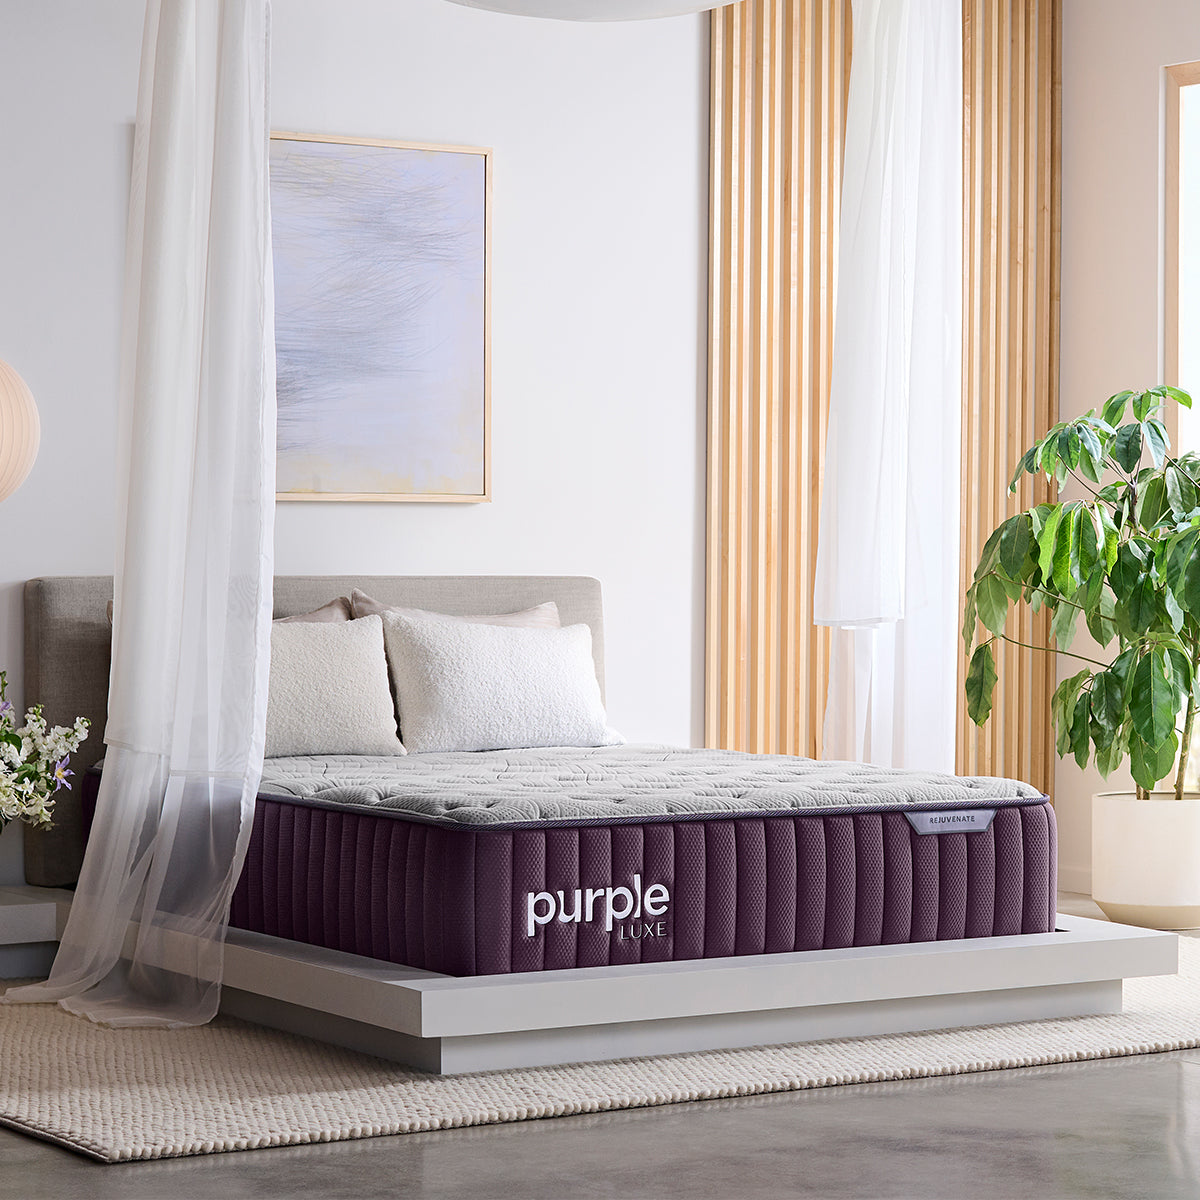 Purple Rejuvenate Mattress In Bedroom